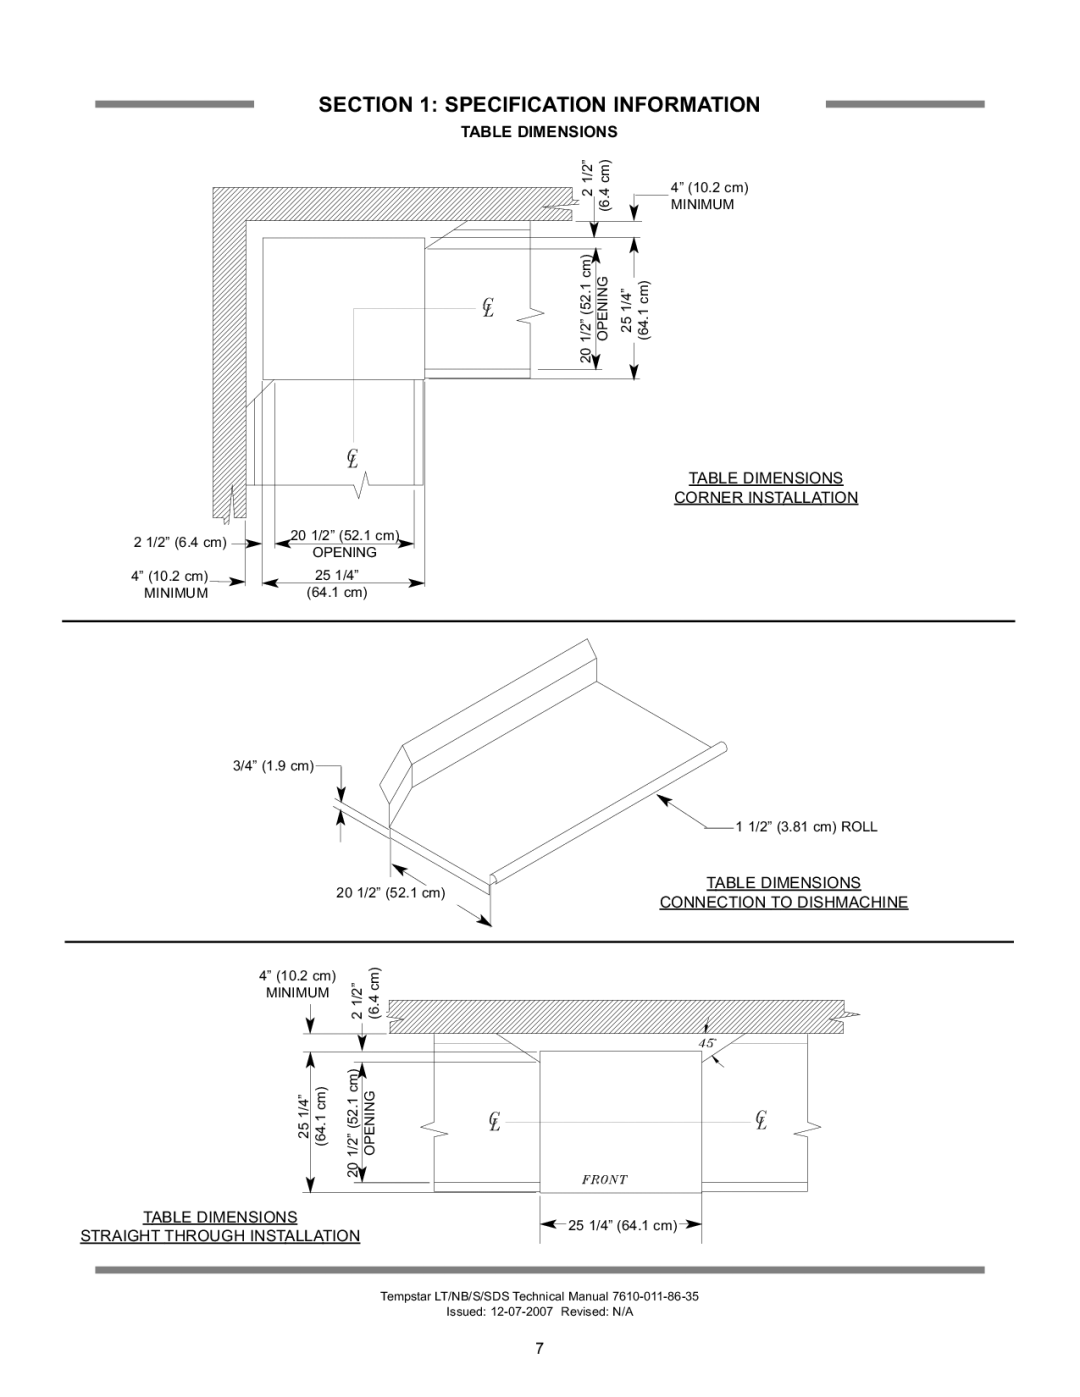 Jackson Tempstar Series technical manual Table Dimensions 